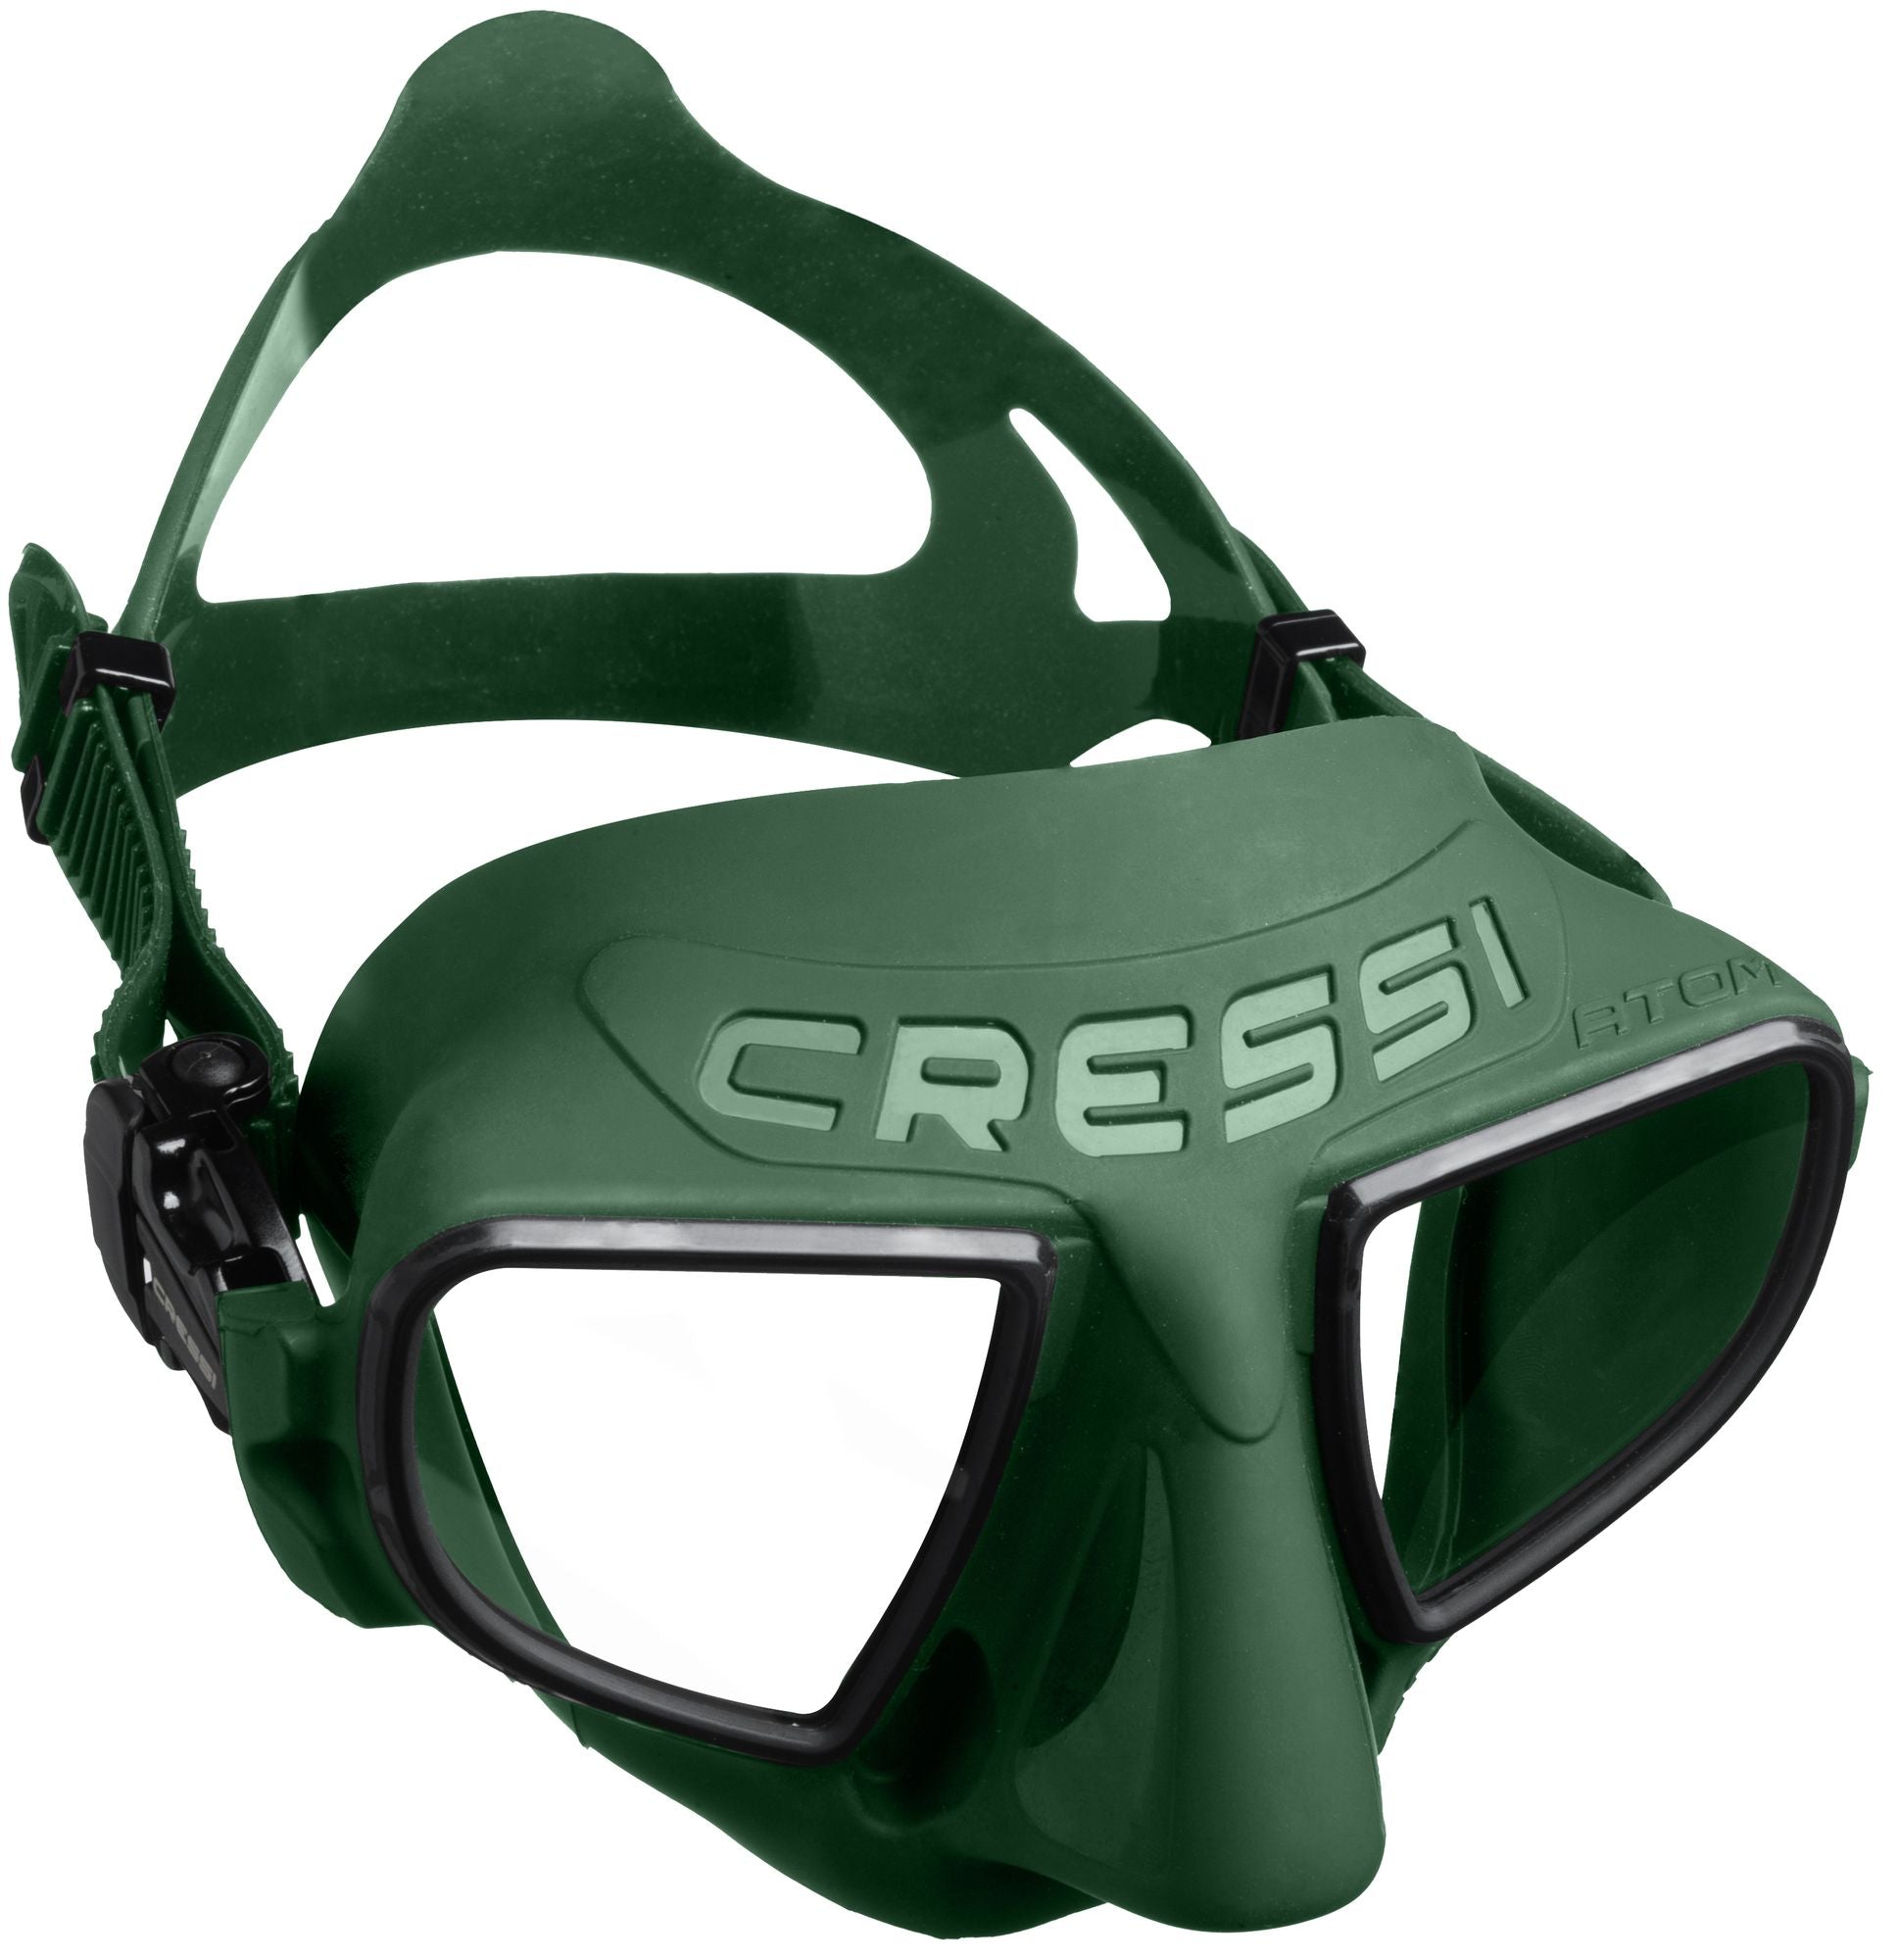 Atom Mask - Scuba mask, Freediving mask, Snorkeling mask